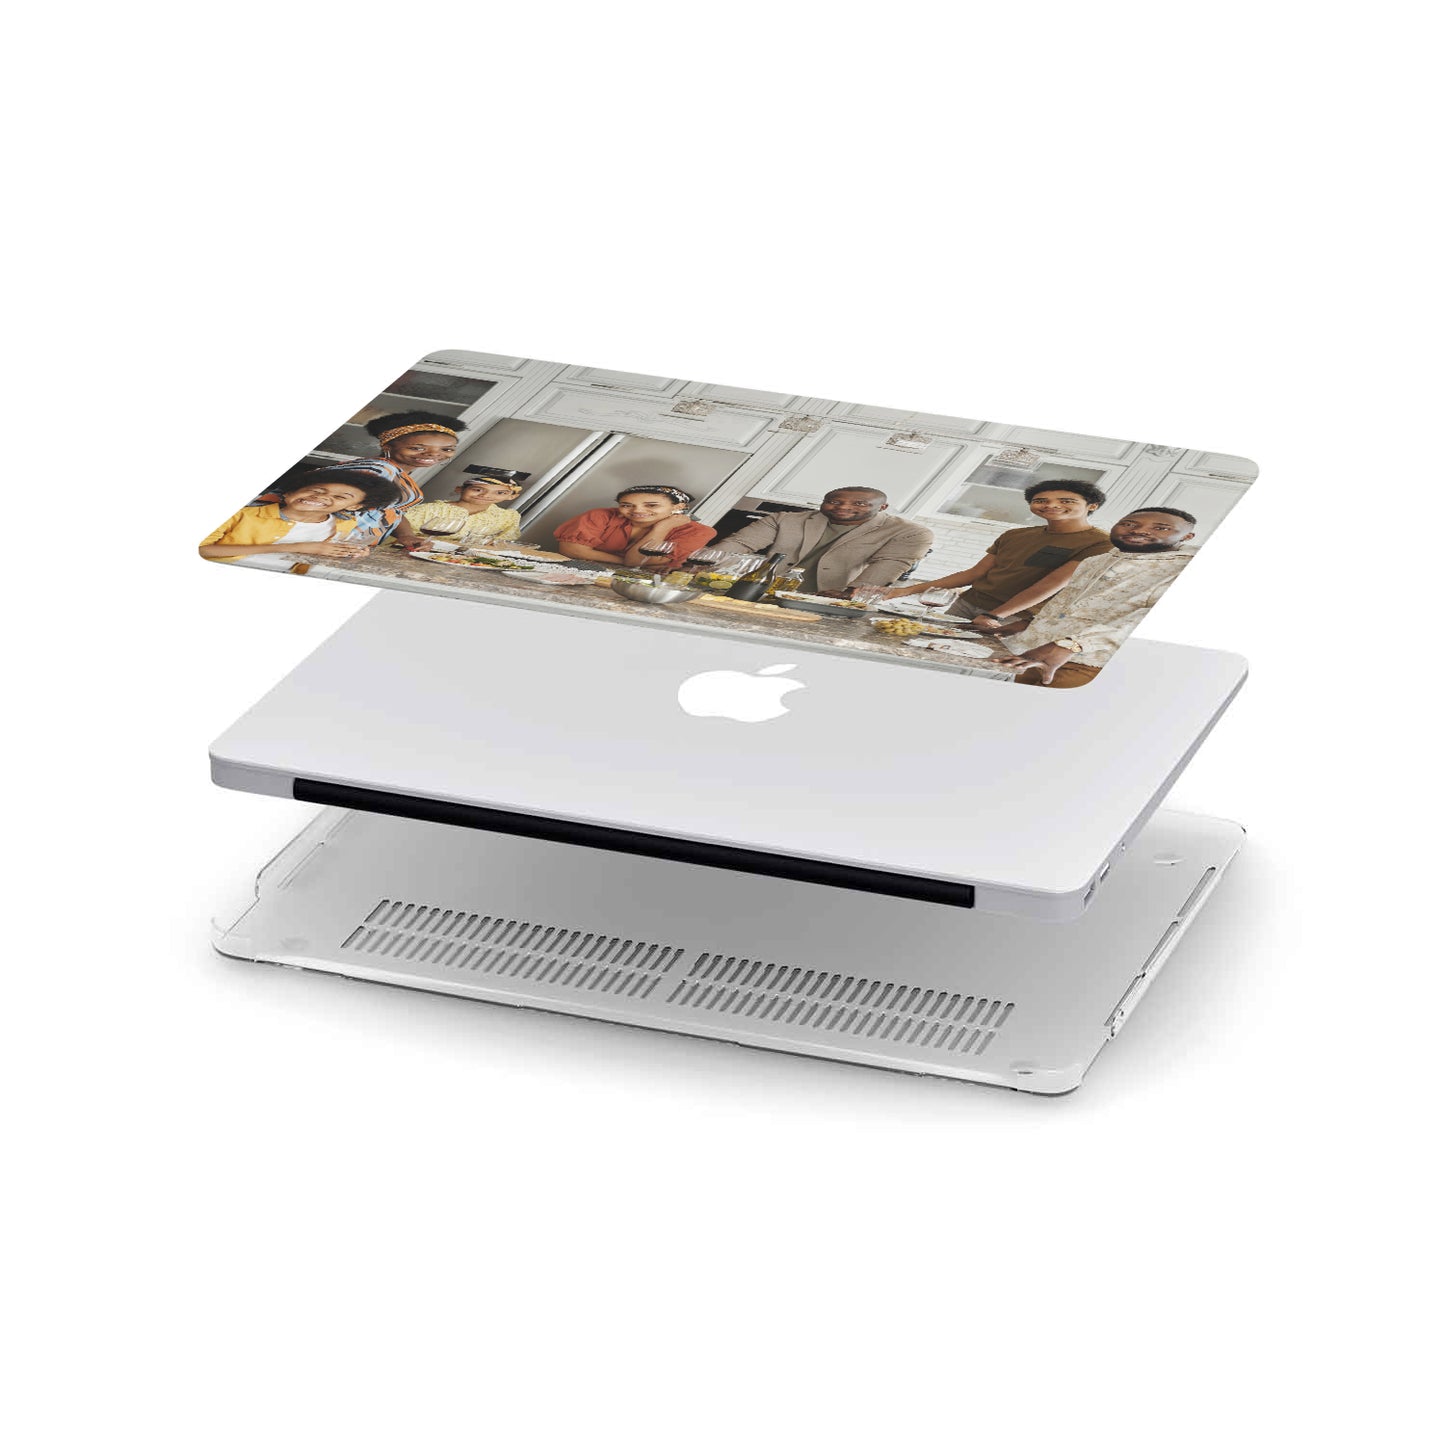 Custom Family Photo Macbook Hard Shell Case - One Image Personalized